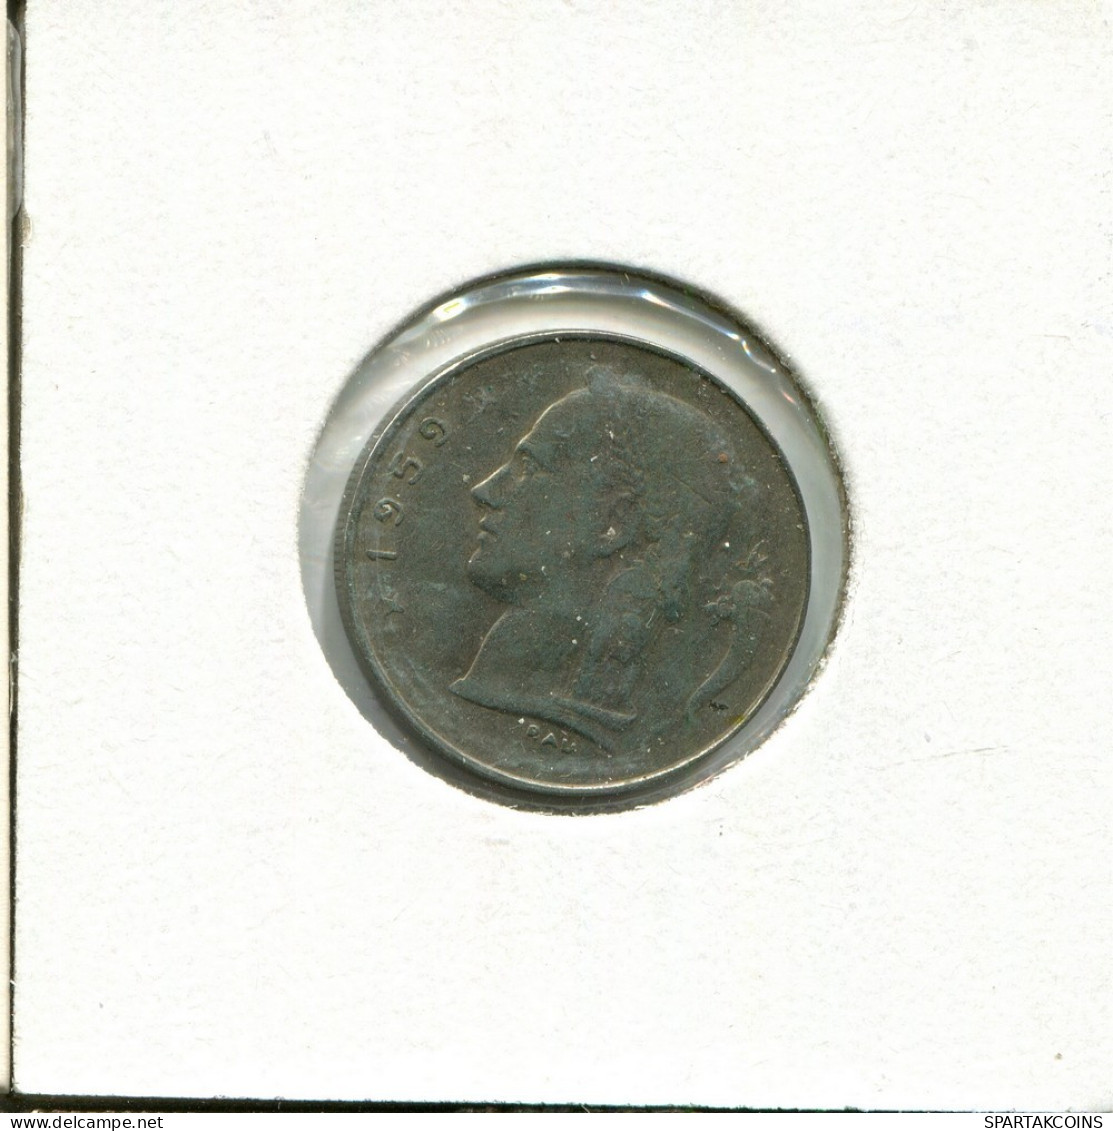 1 FRANC 1959 FRENCH Text BELGIUM Coin #AU667.U.A - 1 Franc